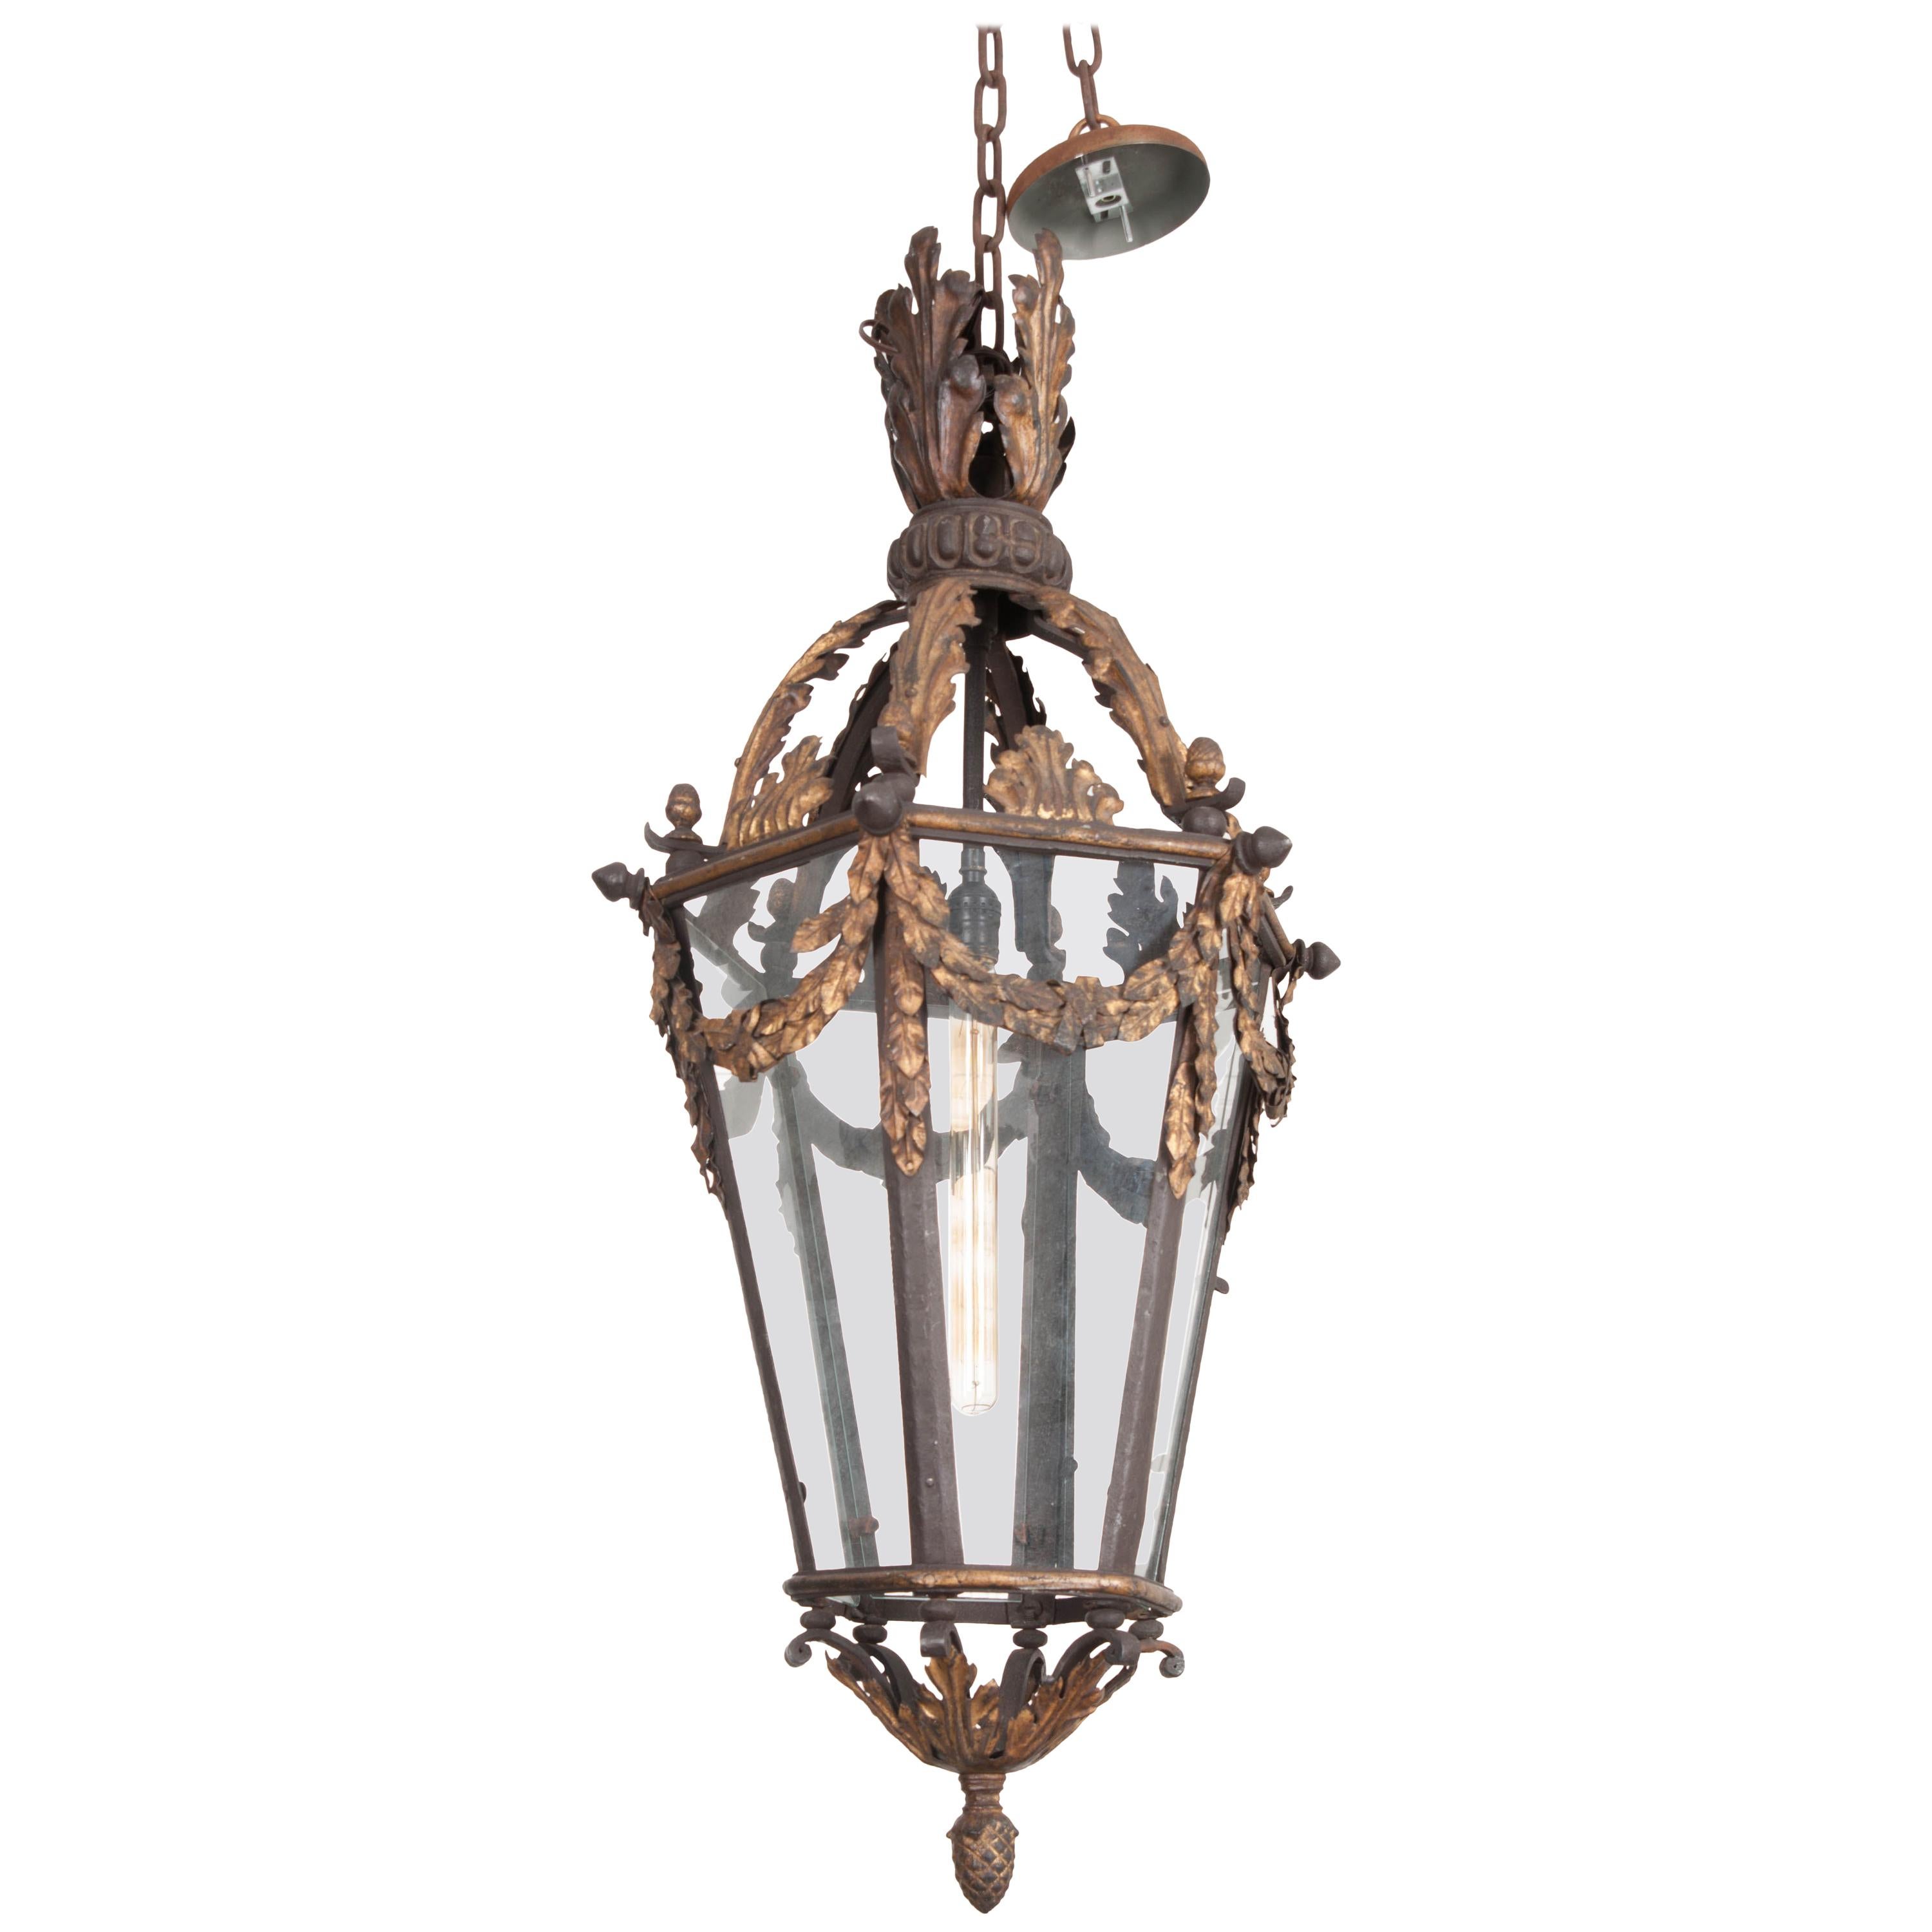 French 19th Century Iron and Gilt-Brass Single-Light Lantern